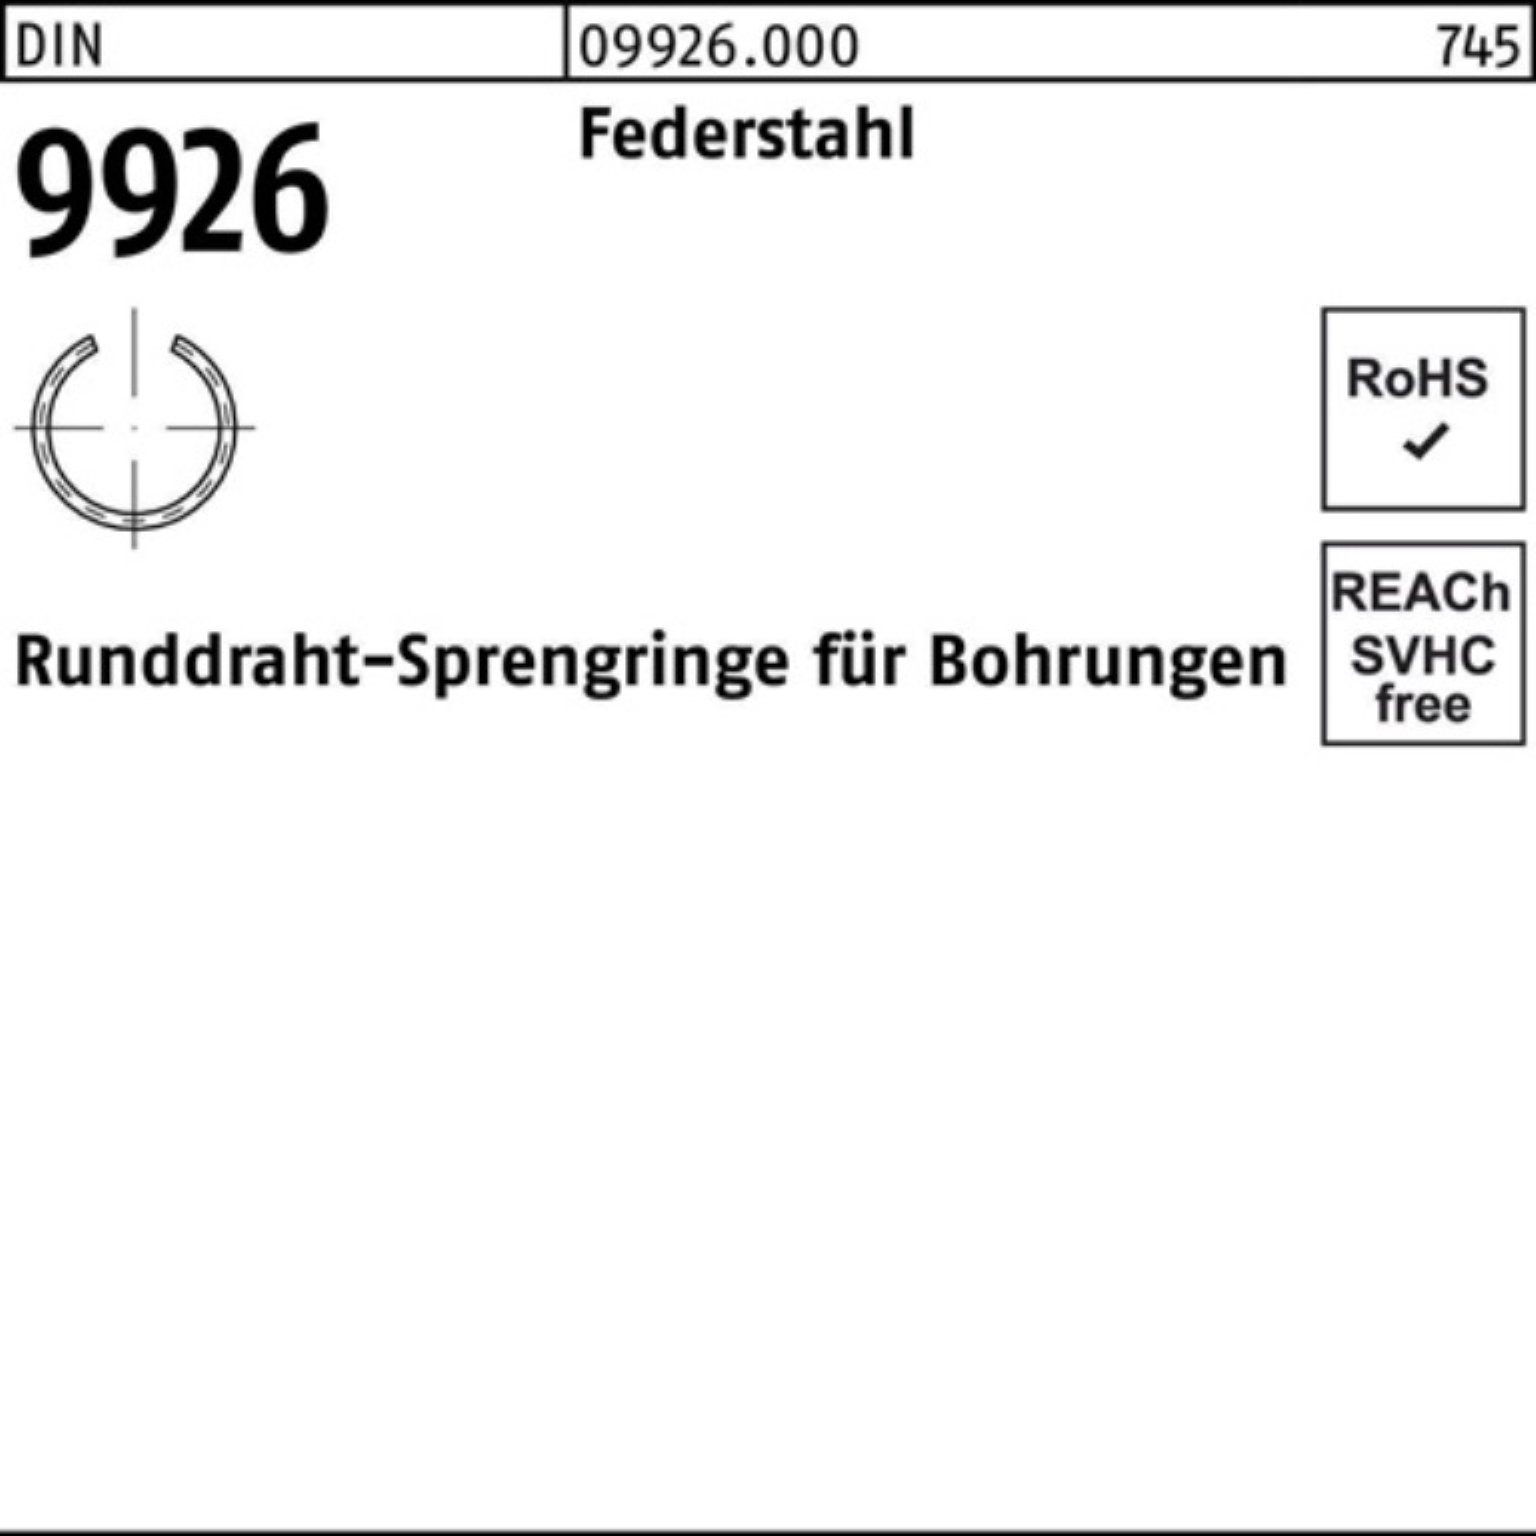 Reyher Sprengring 2000er Pack DI Federstahl Stück 2000 Runddraht Sprengring 18 DIN 9926